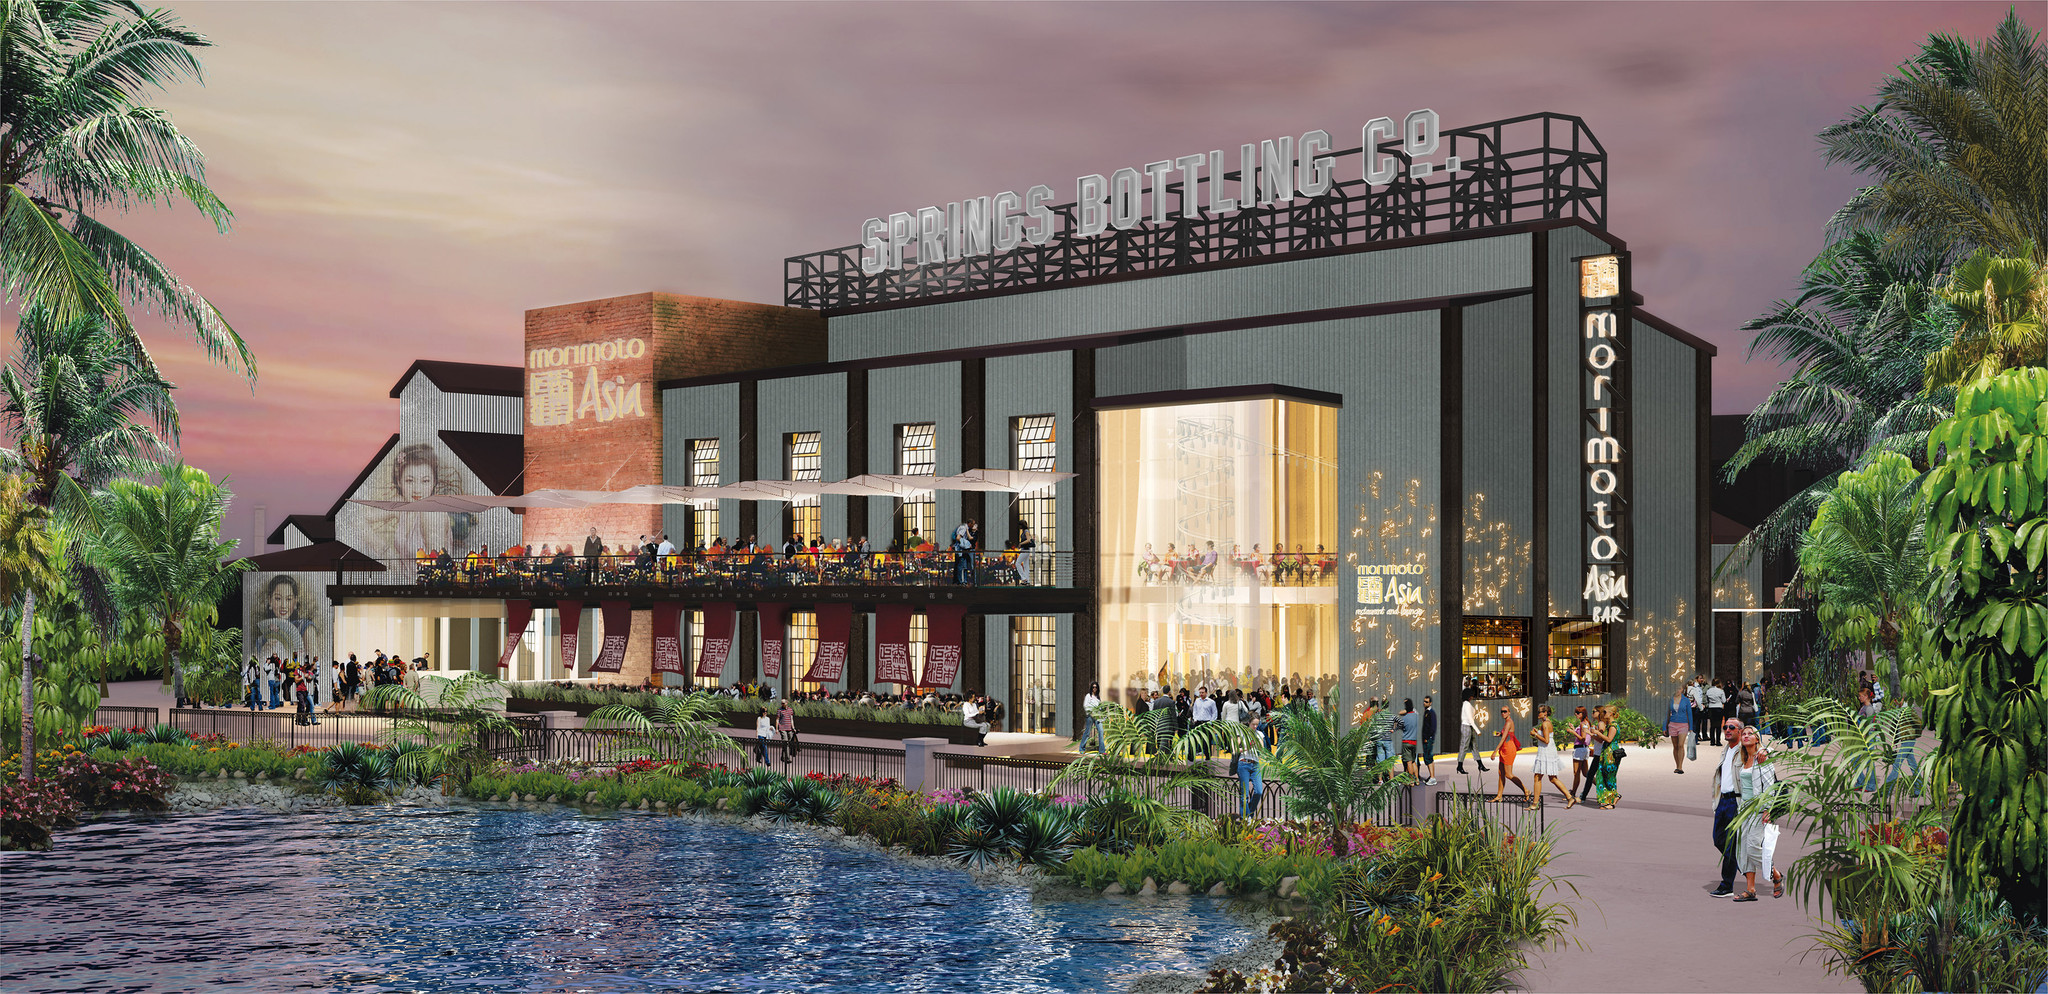 Waterfront restaurants set for Downtown Disney - Orlando Sentinel